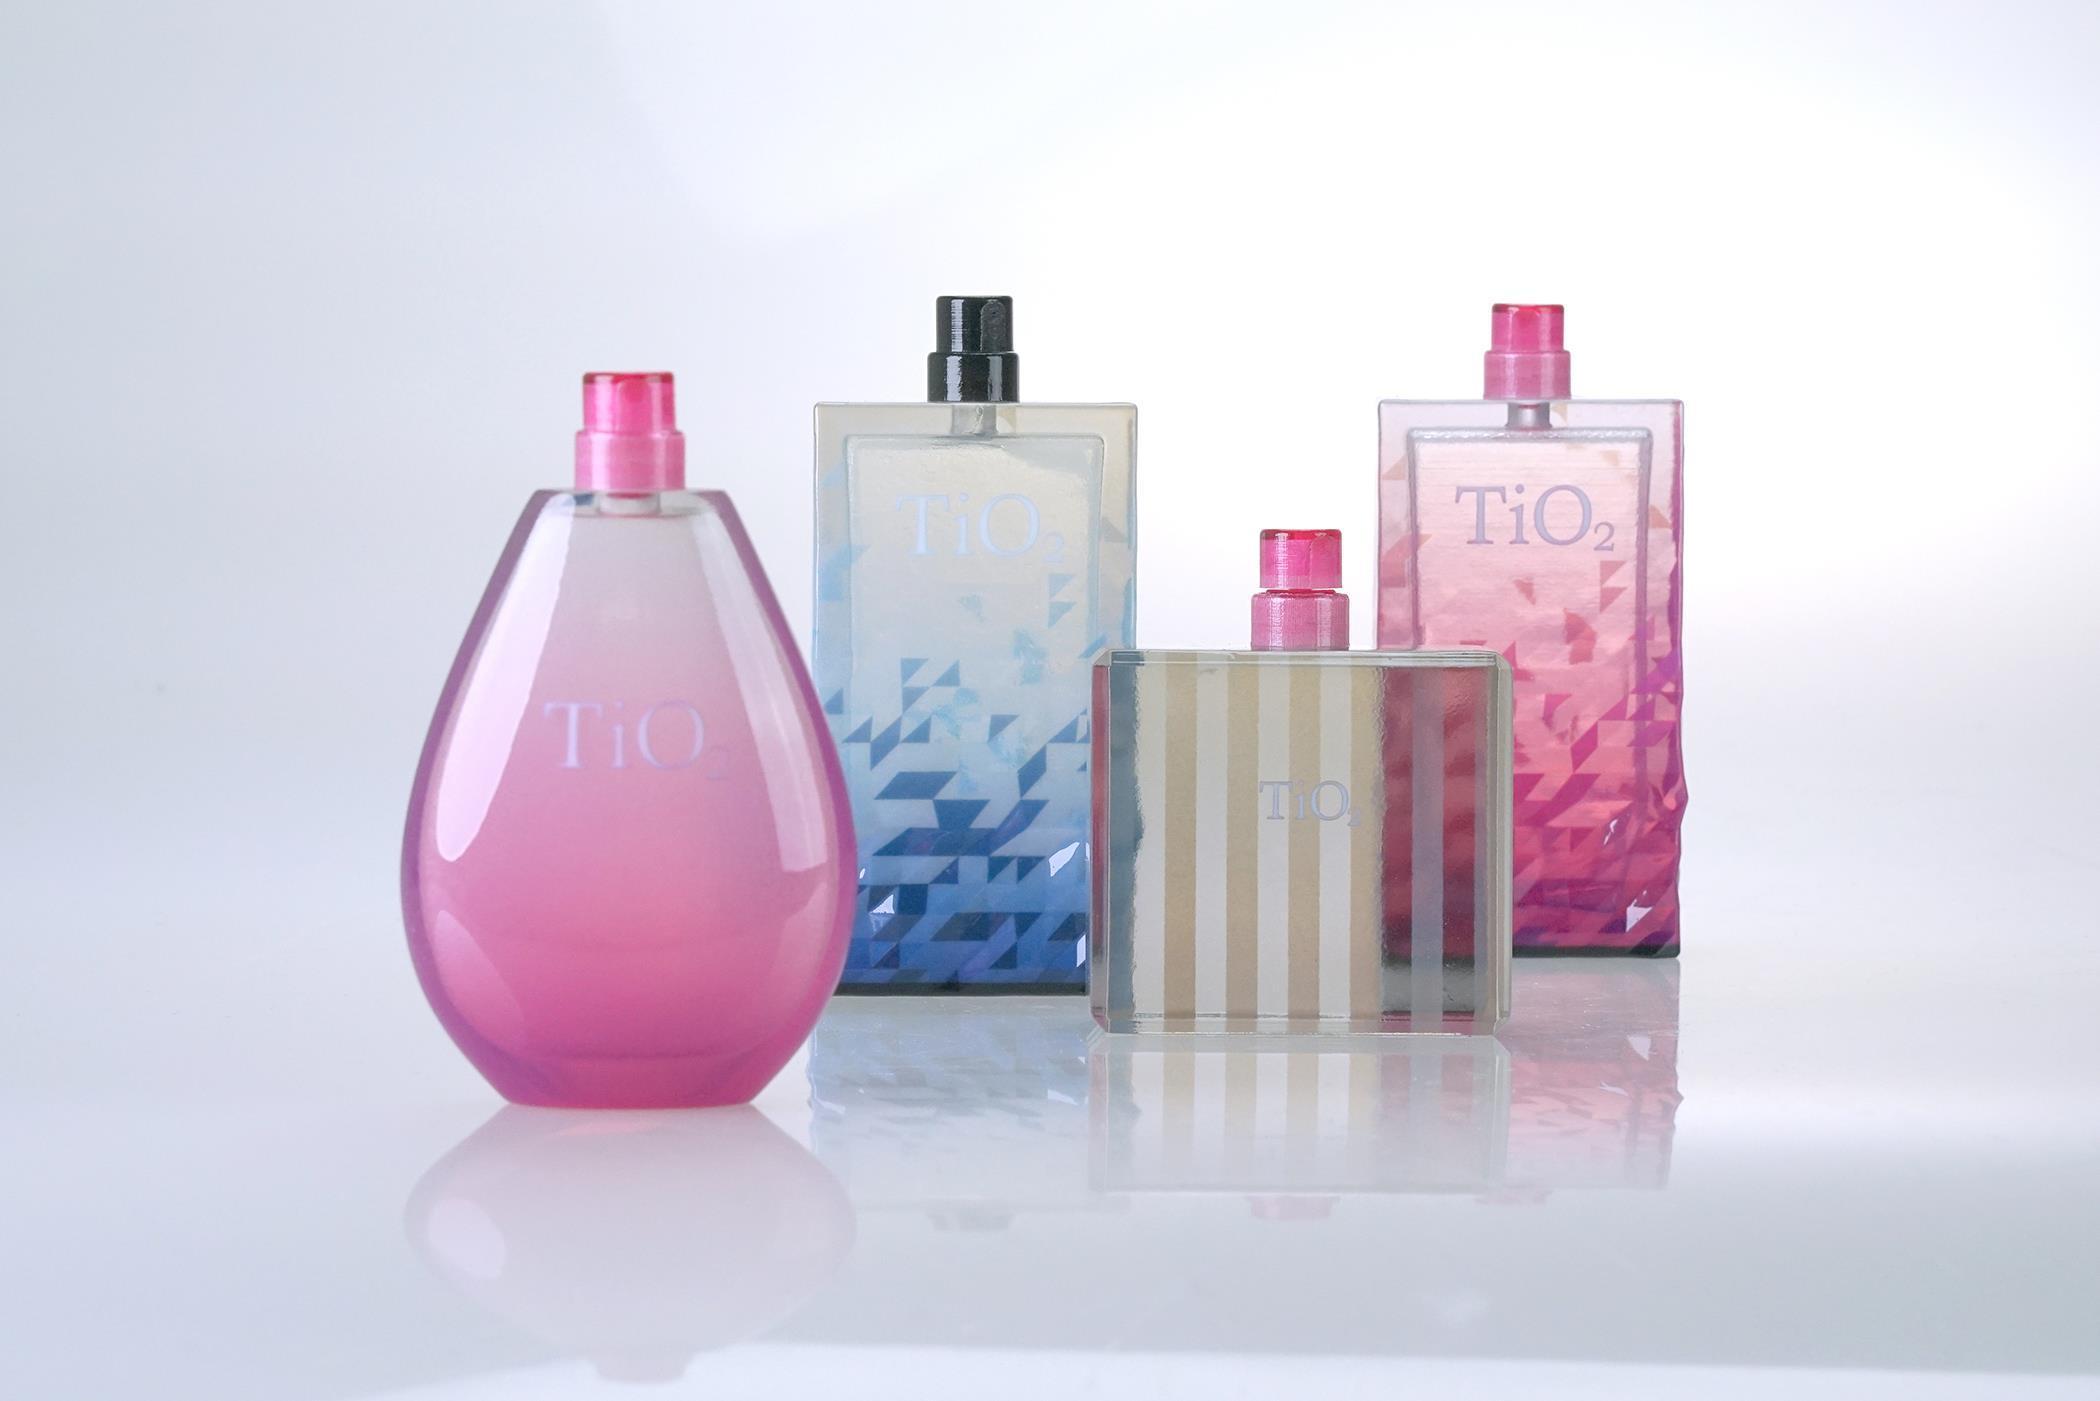 Perfume Bottles 2 Stratasys J750 Vivid Colors